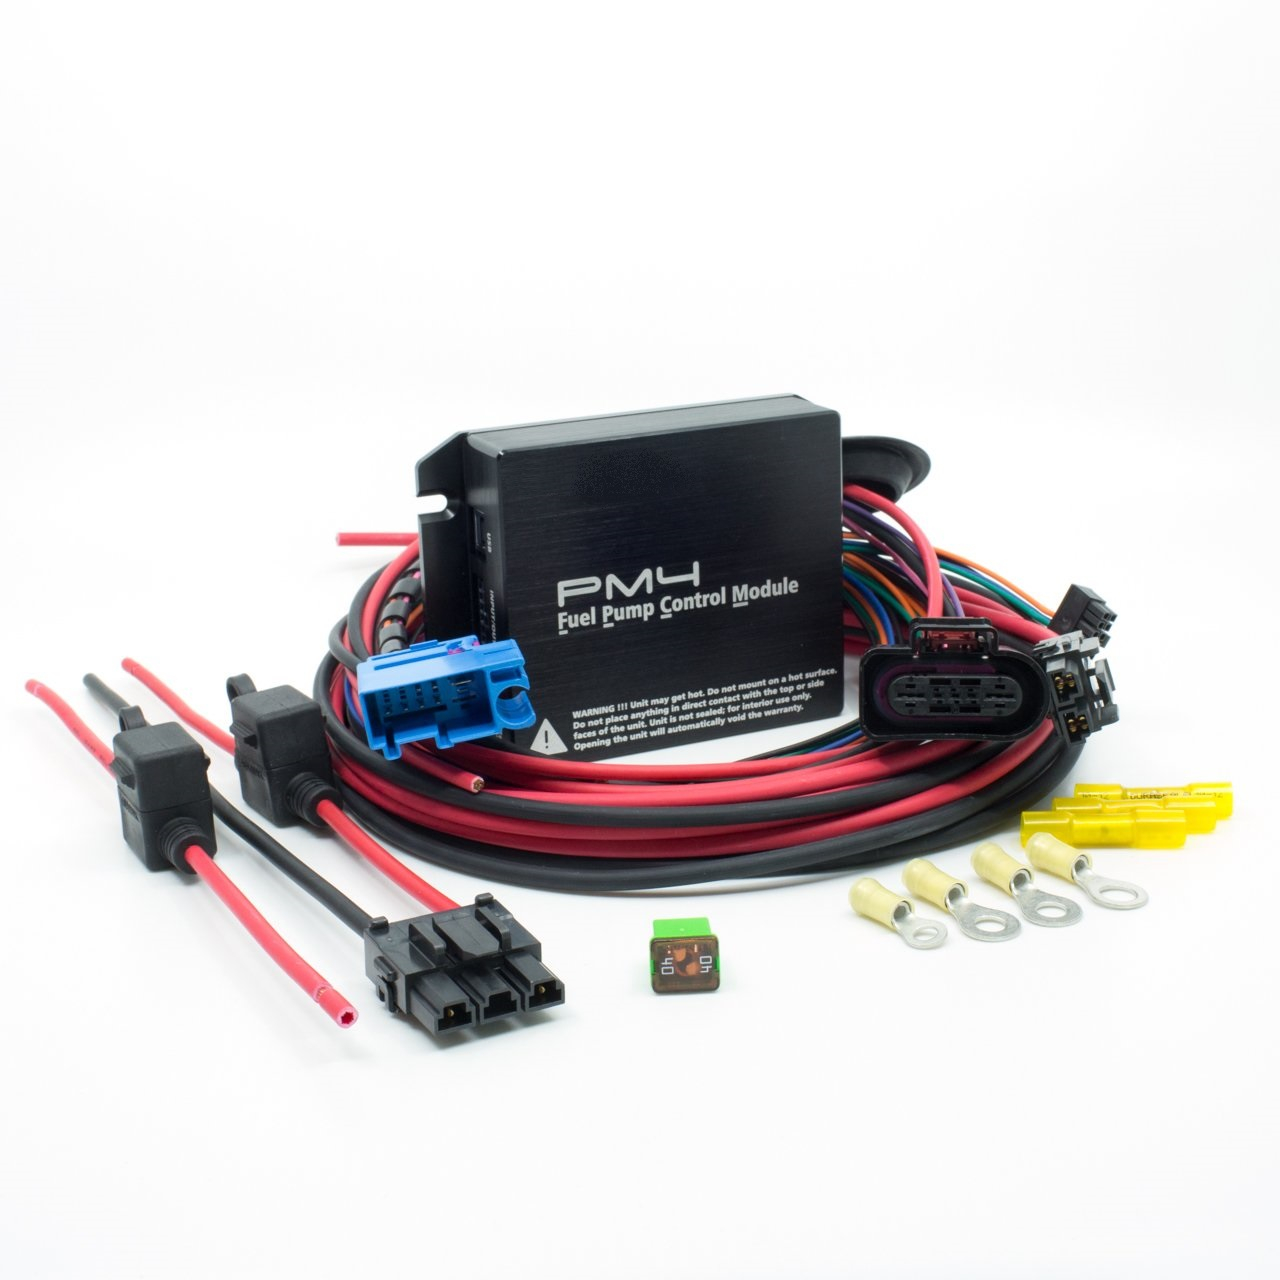 TURBO Amplifier PM4 for upgrade Fuel Pumps Torqbyte BAR-TEK®